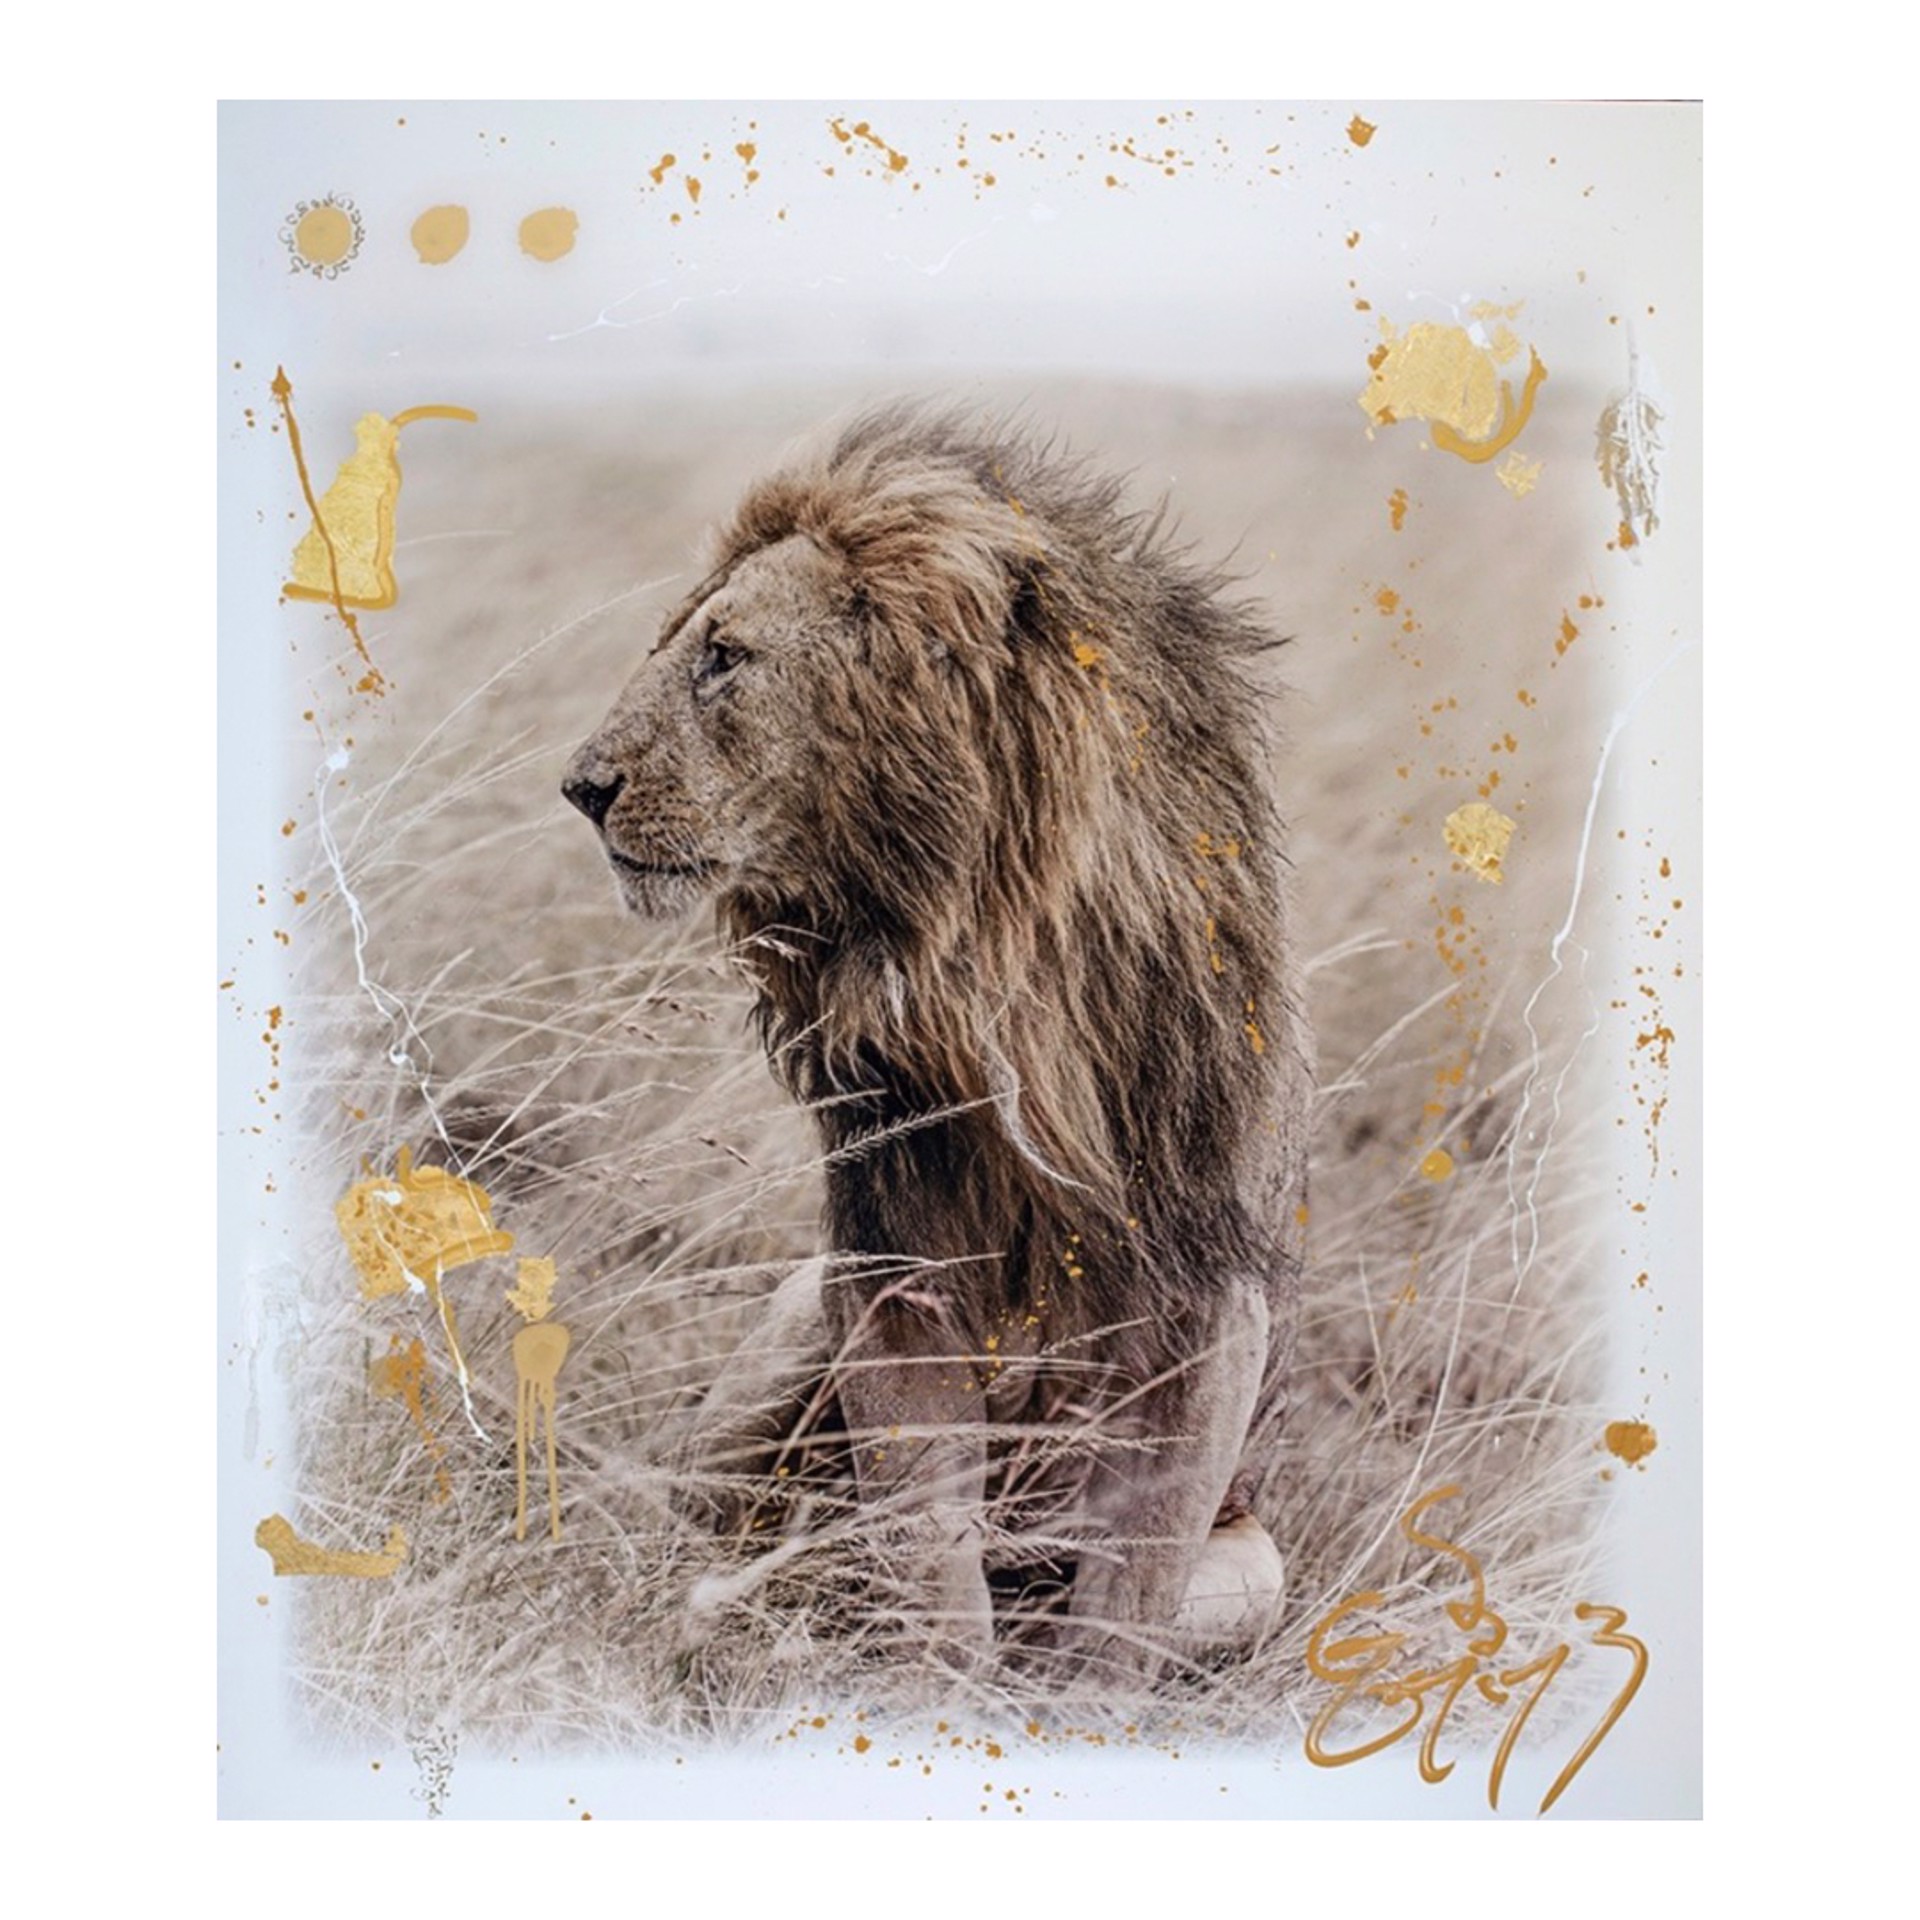 Lions, Simba Gold by Arno Elias